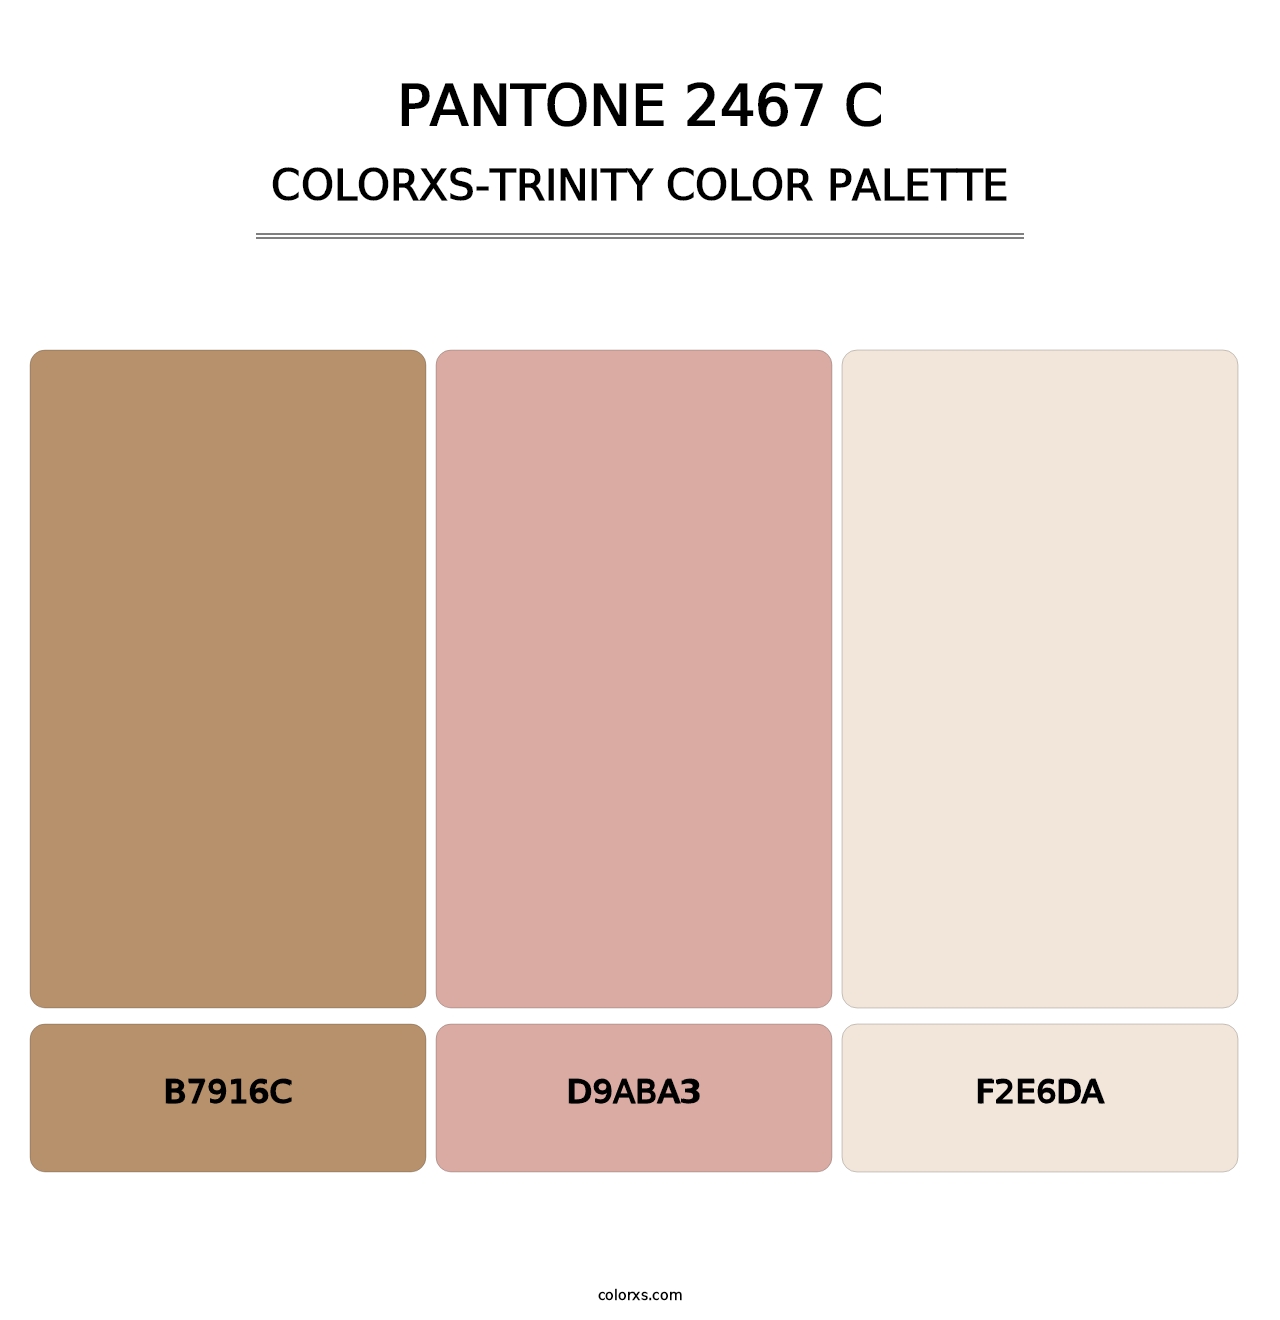 PANTONE 2467 C - Colorxs Trinity Palette